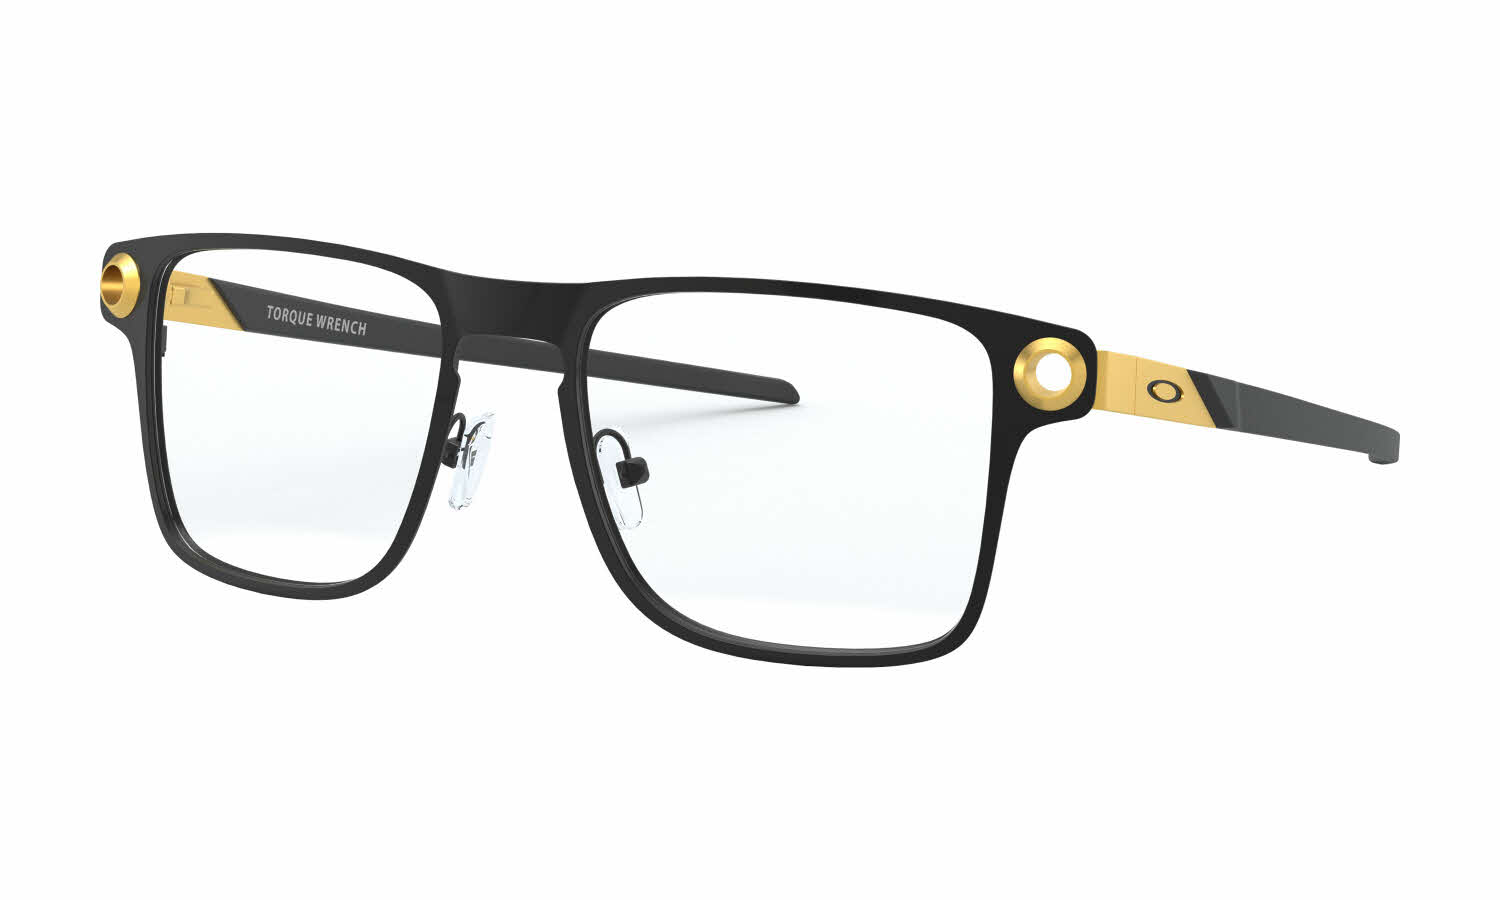 Oakley Torque Wrench - Ahyris Collection Eyeglasses